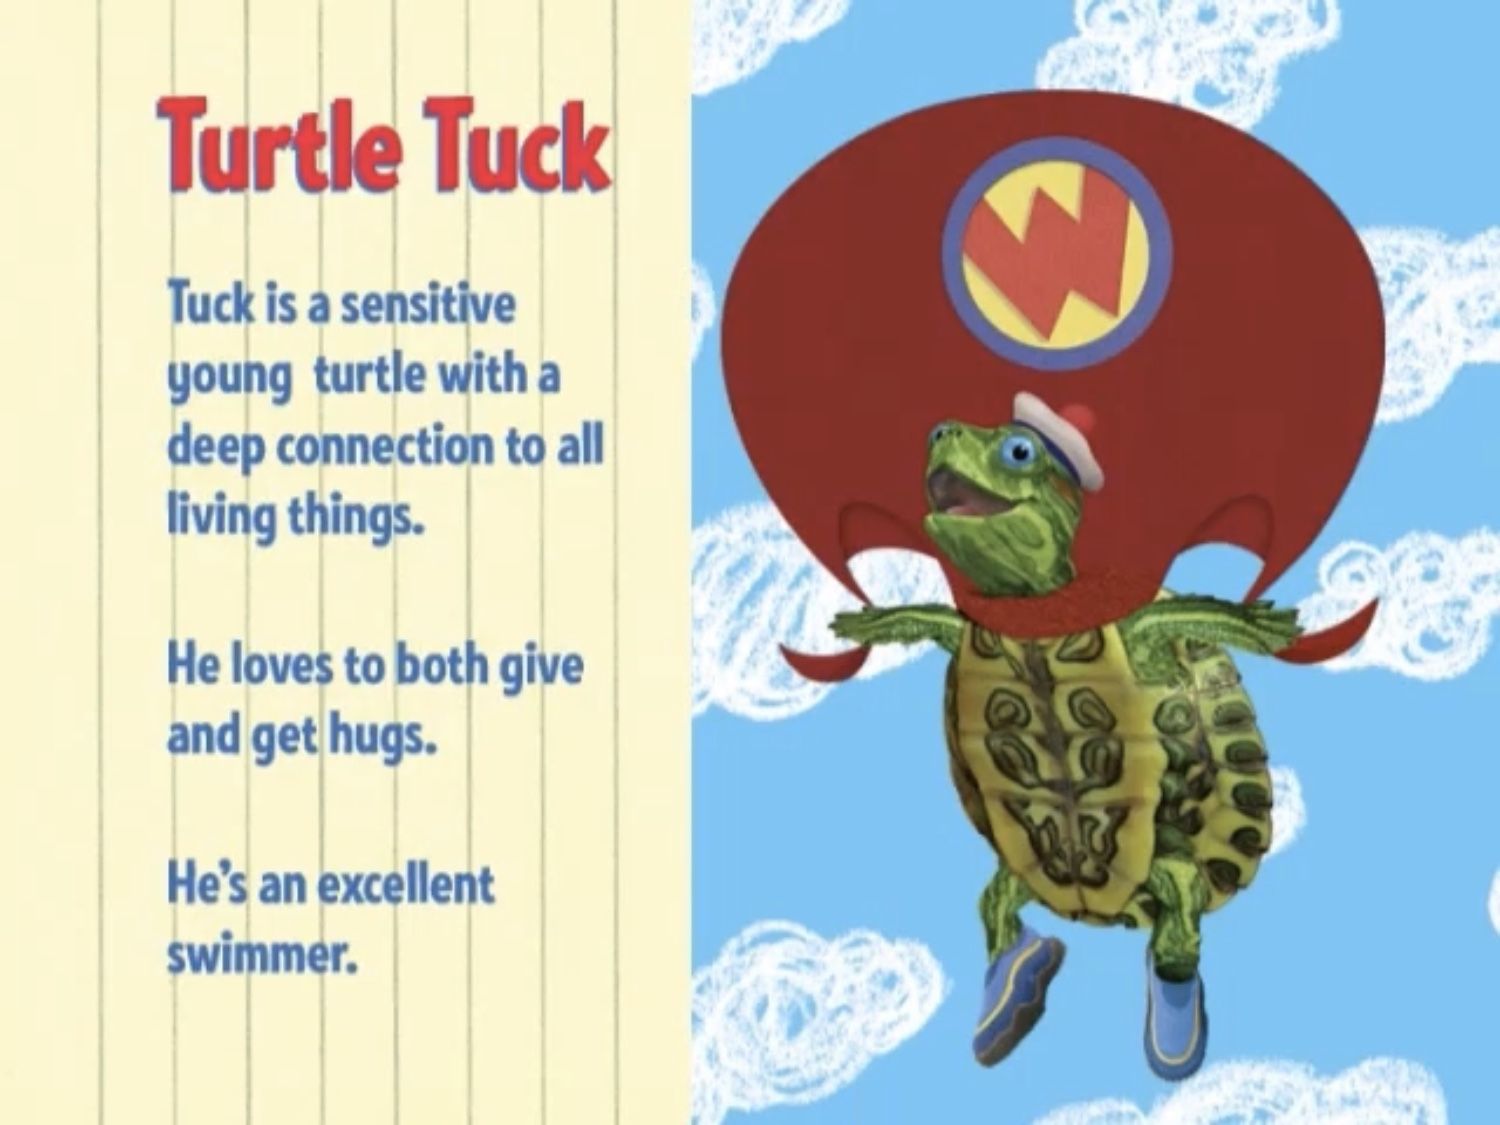 Turtle Tuck Photo Gallery. Wonder pets, Turtle, Pets